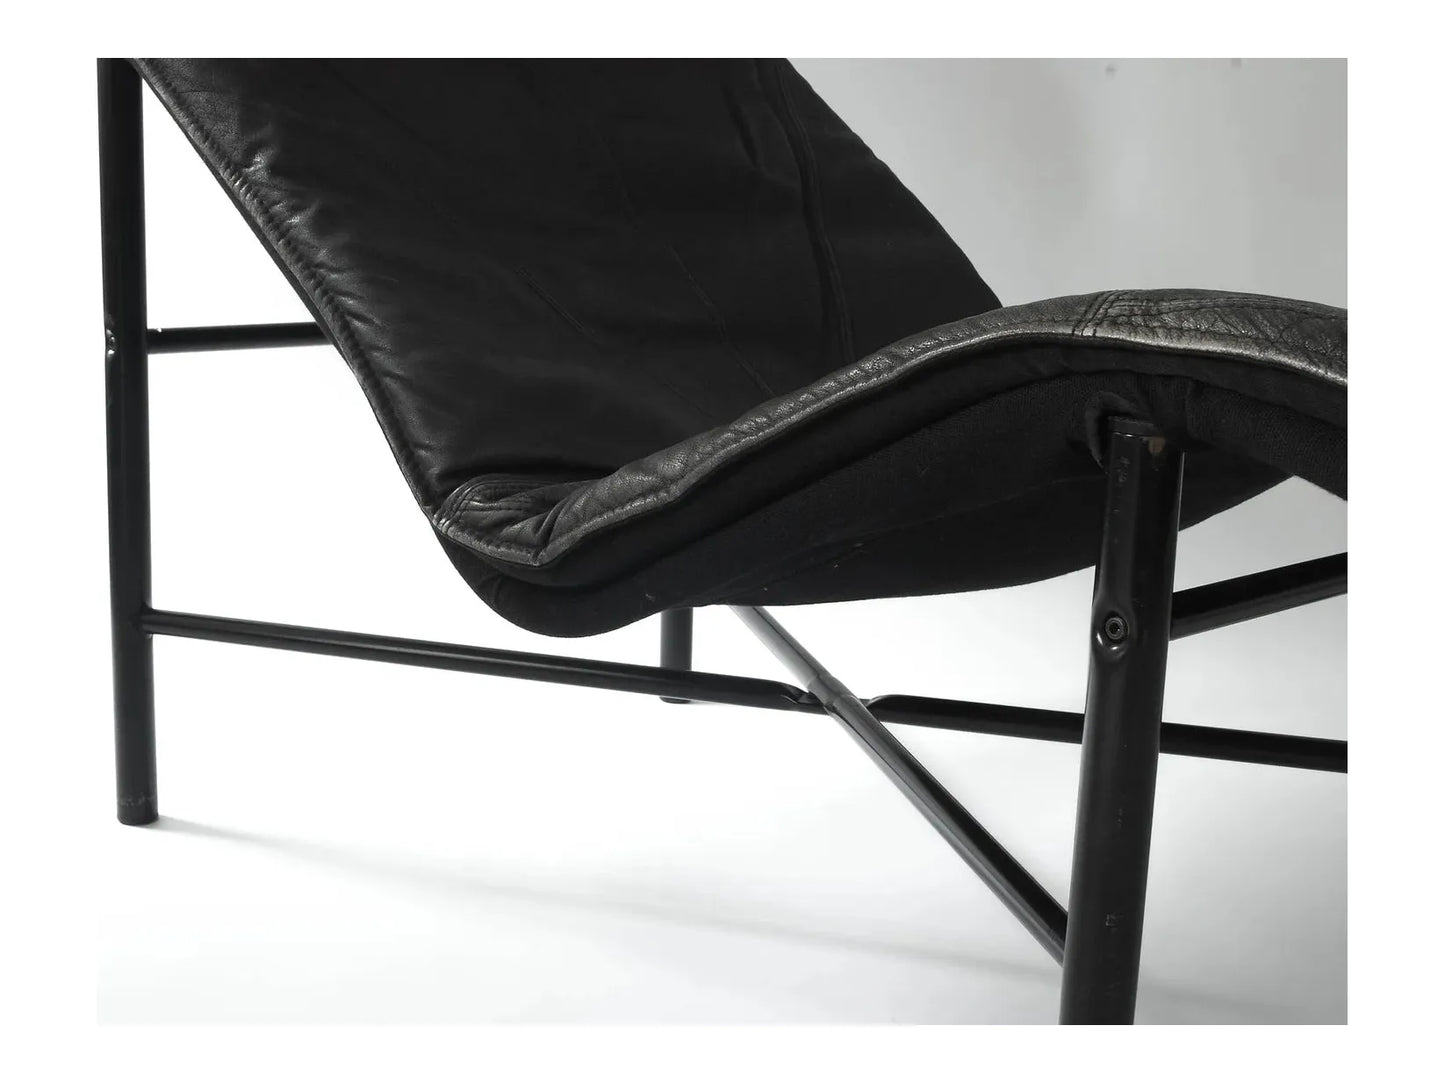 Tord Björklund “Skye” Chaise Lounge for Ikea